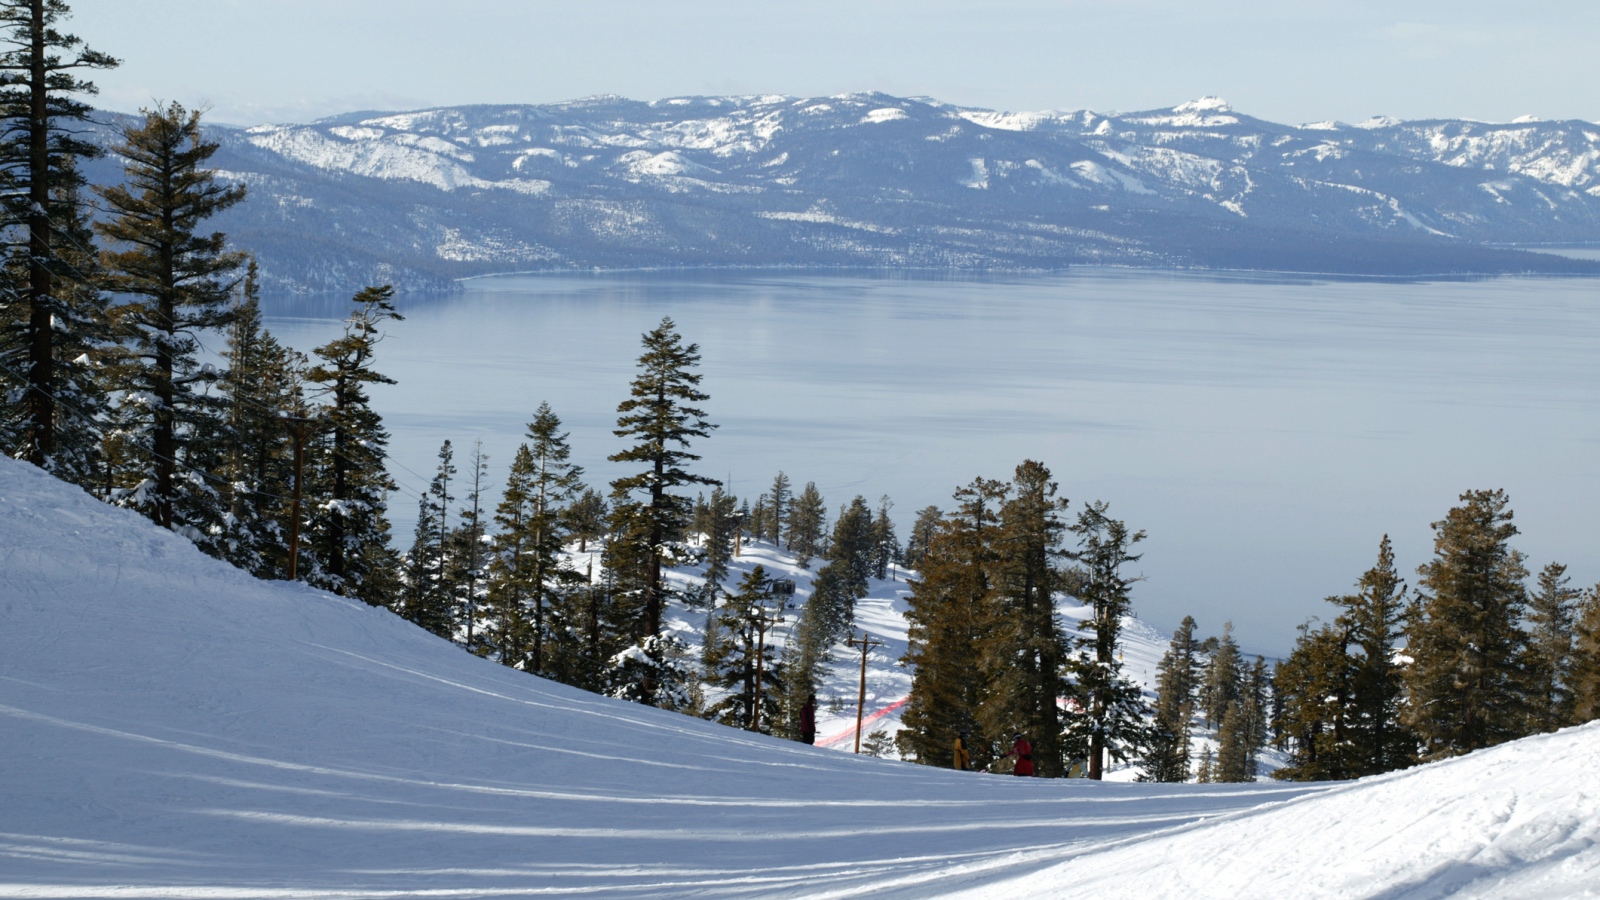 view from Heavenly ski resort in South Lake Tahoe